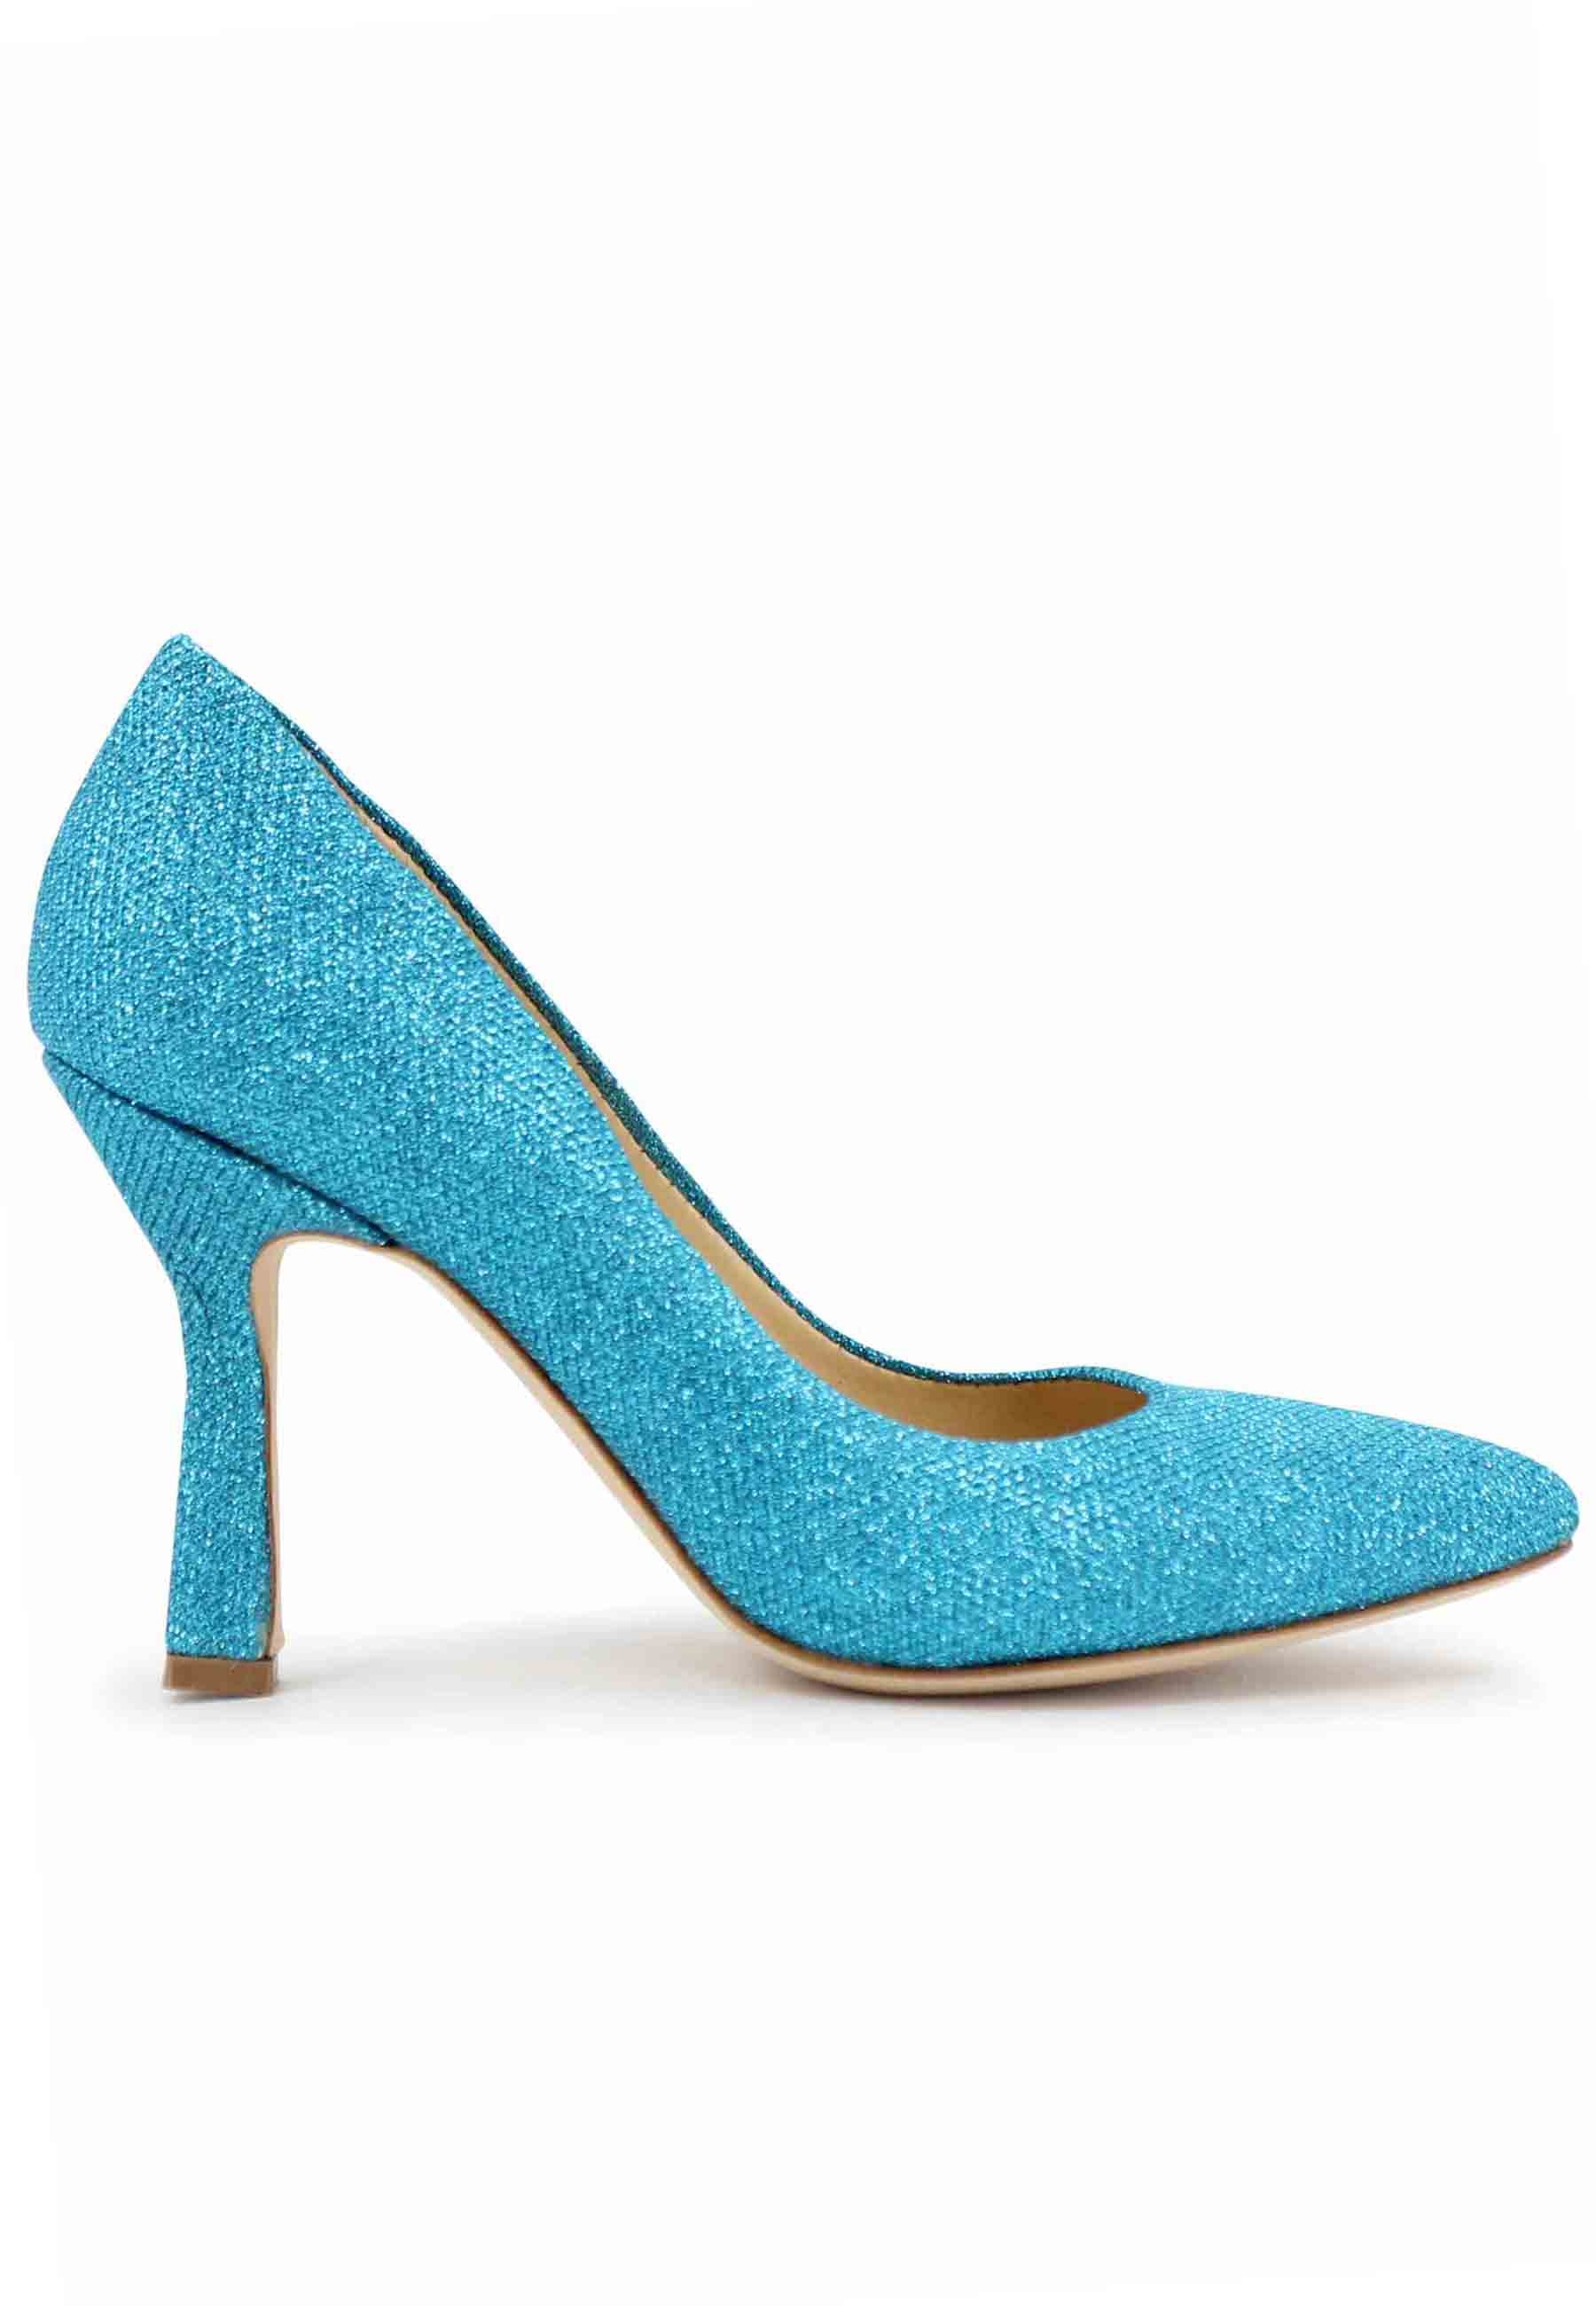 DE1002/RT women's pumps in light blue lux fabric with high heel